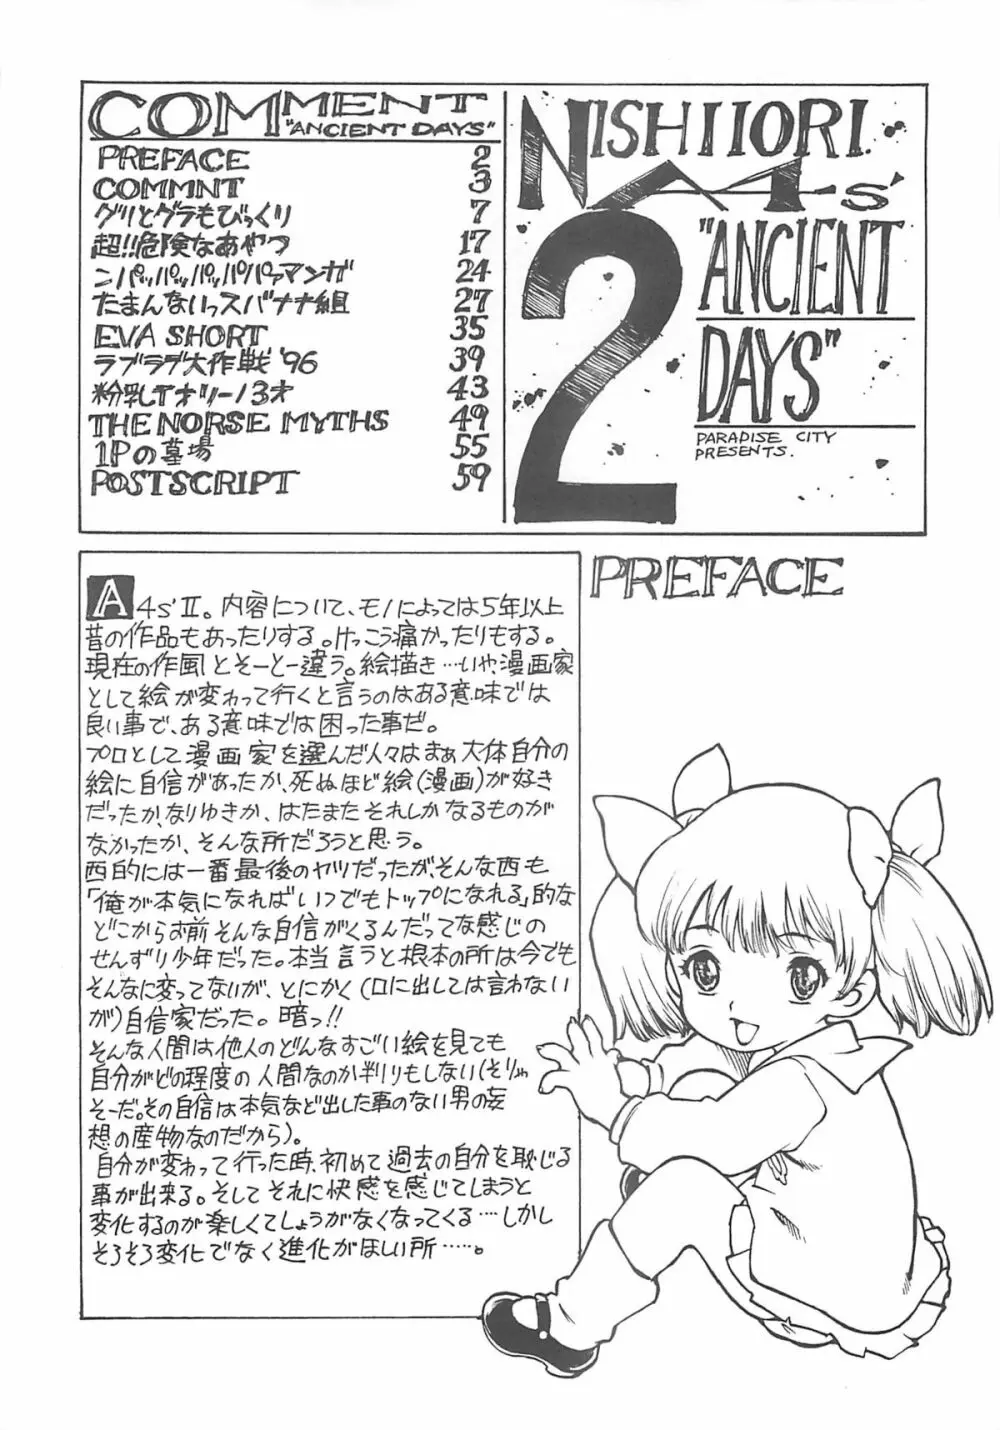 NISHI IORI A4s’2 ”ANCIENT DAYS” 3ページ